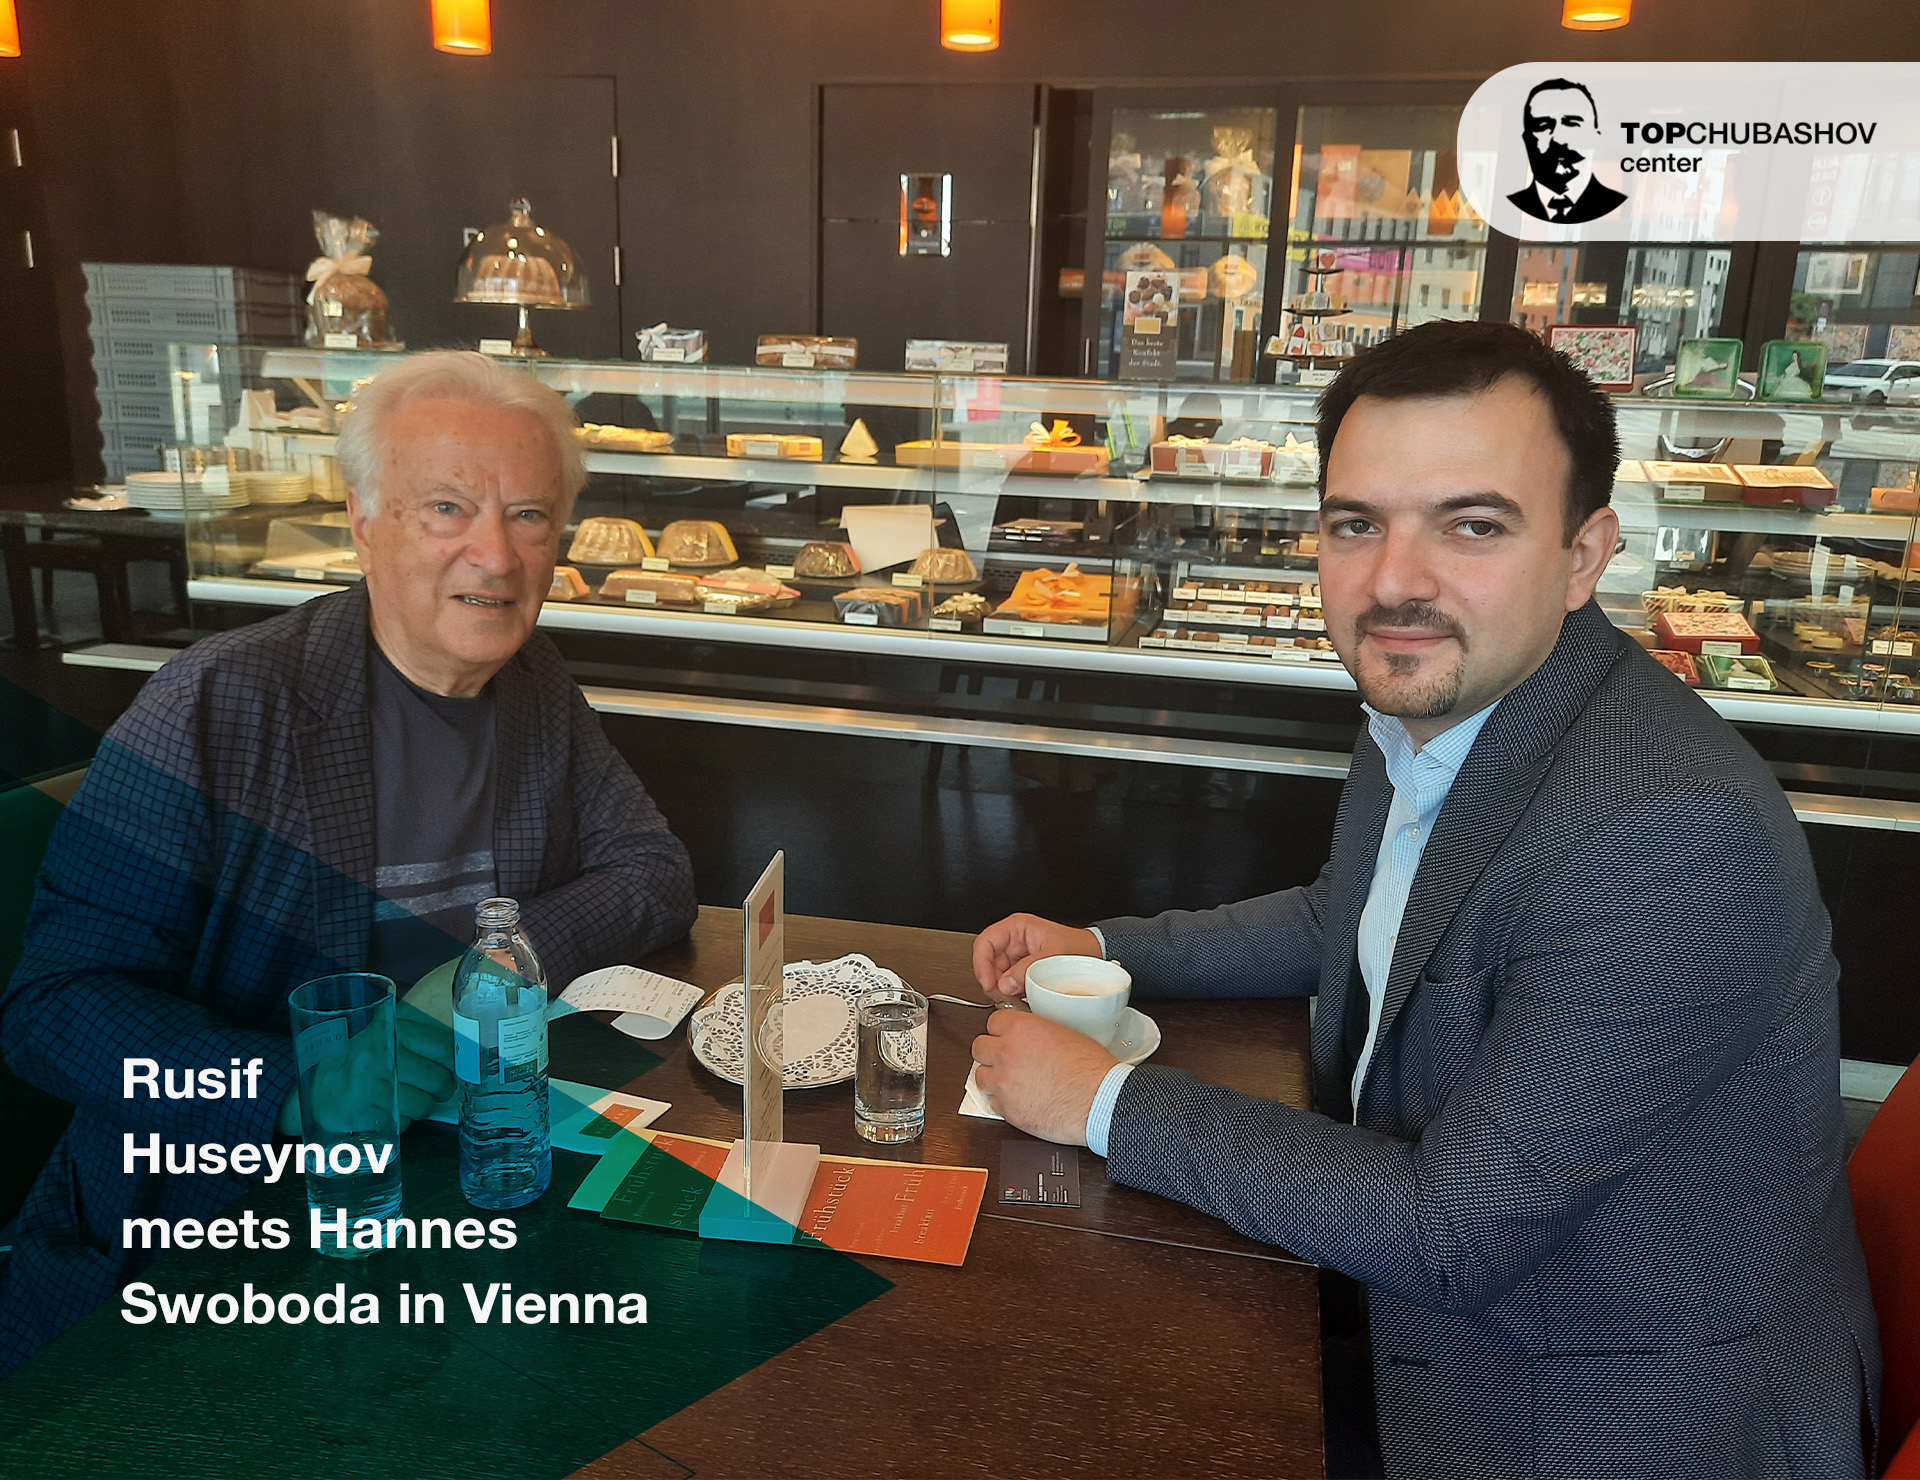 Rusif Huseynov meets with Hannes Swoboda in Vienna